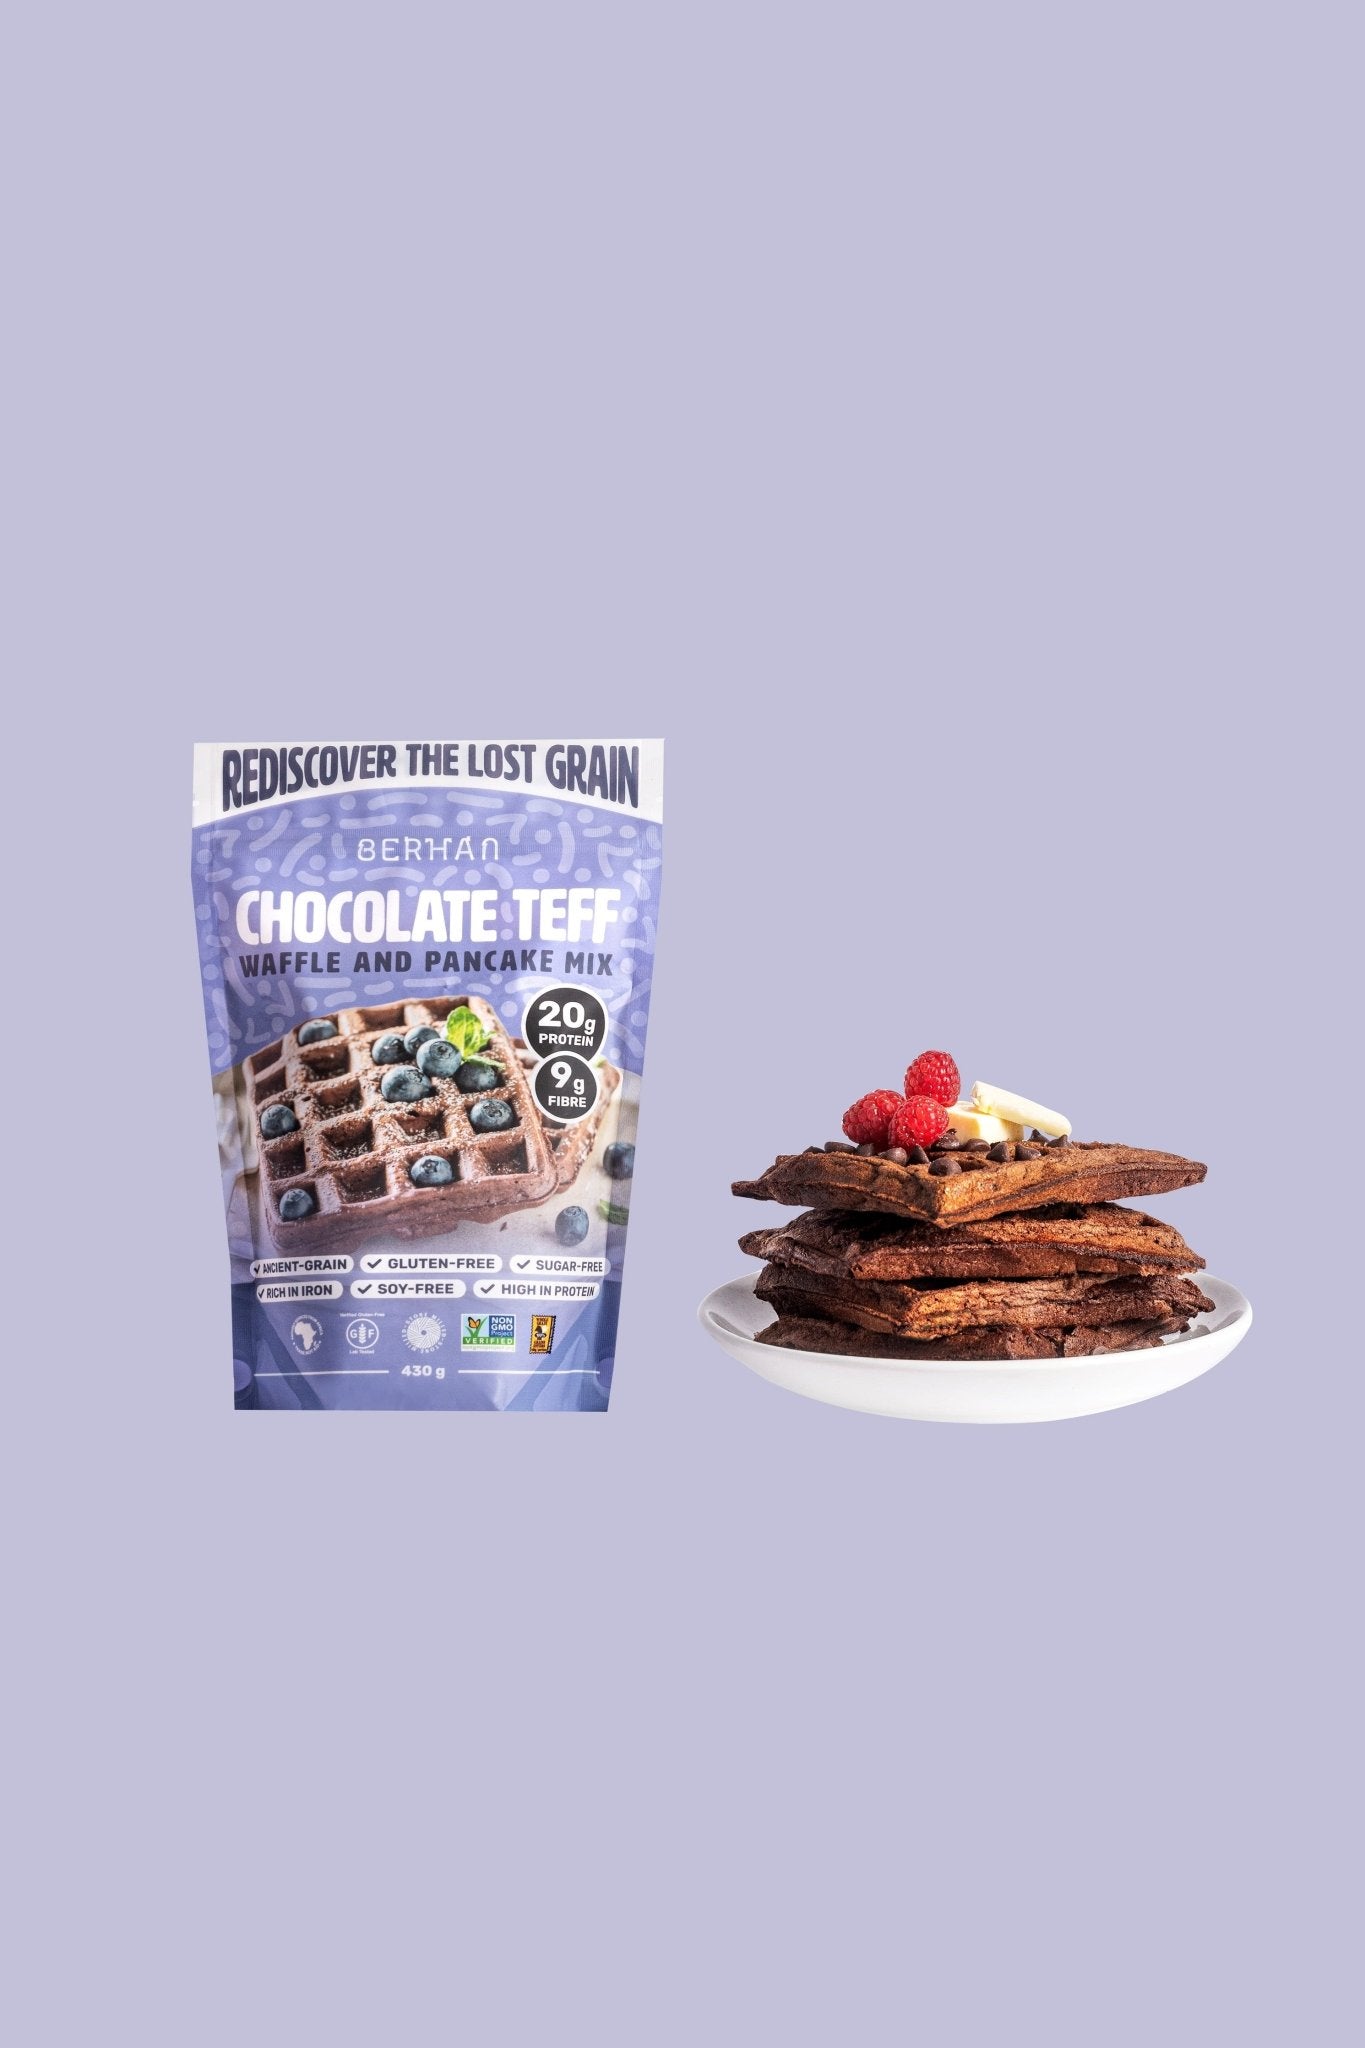 High Protein Chocolate Teff Waffle and Pancake Mix | Naturally Gluten-Free | Iron Rich | Fiber Rich - Berhan Teff